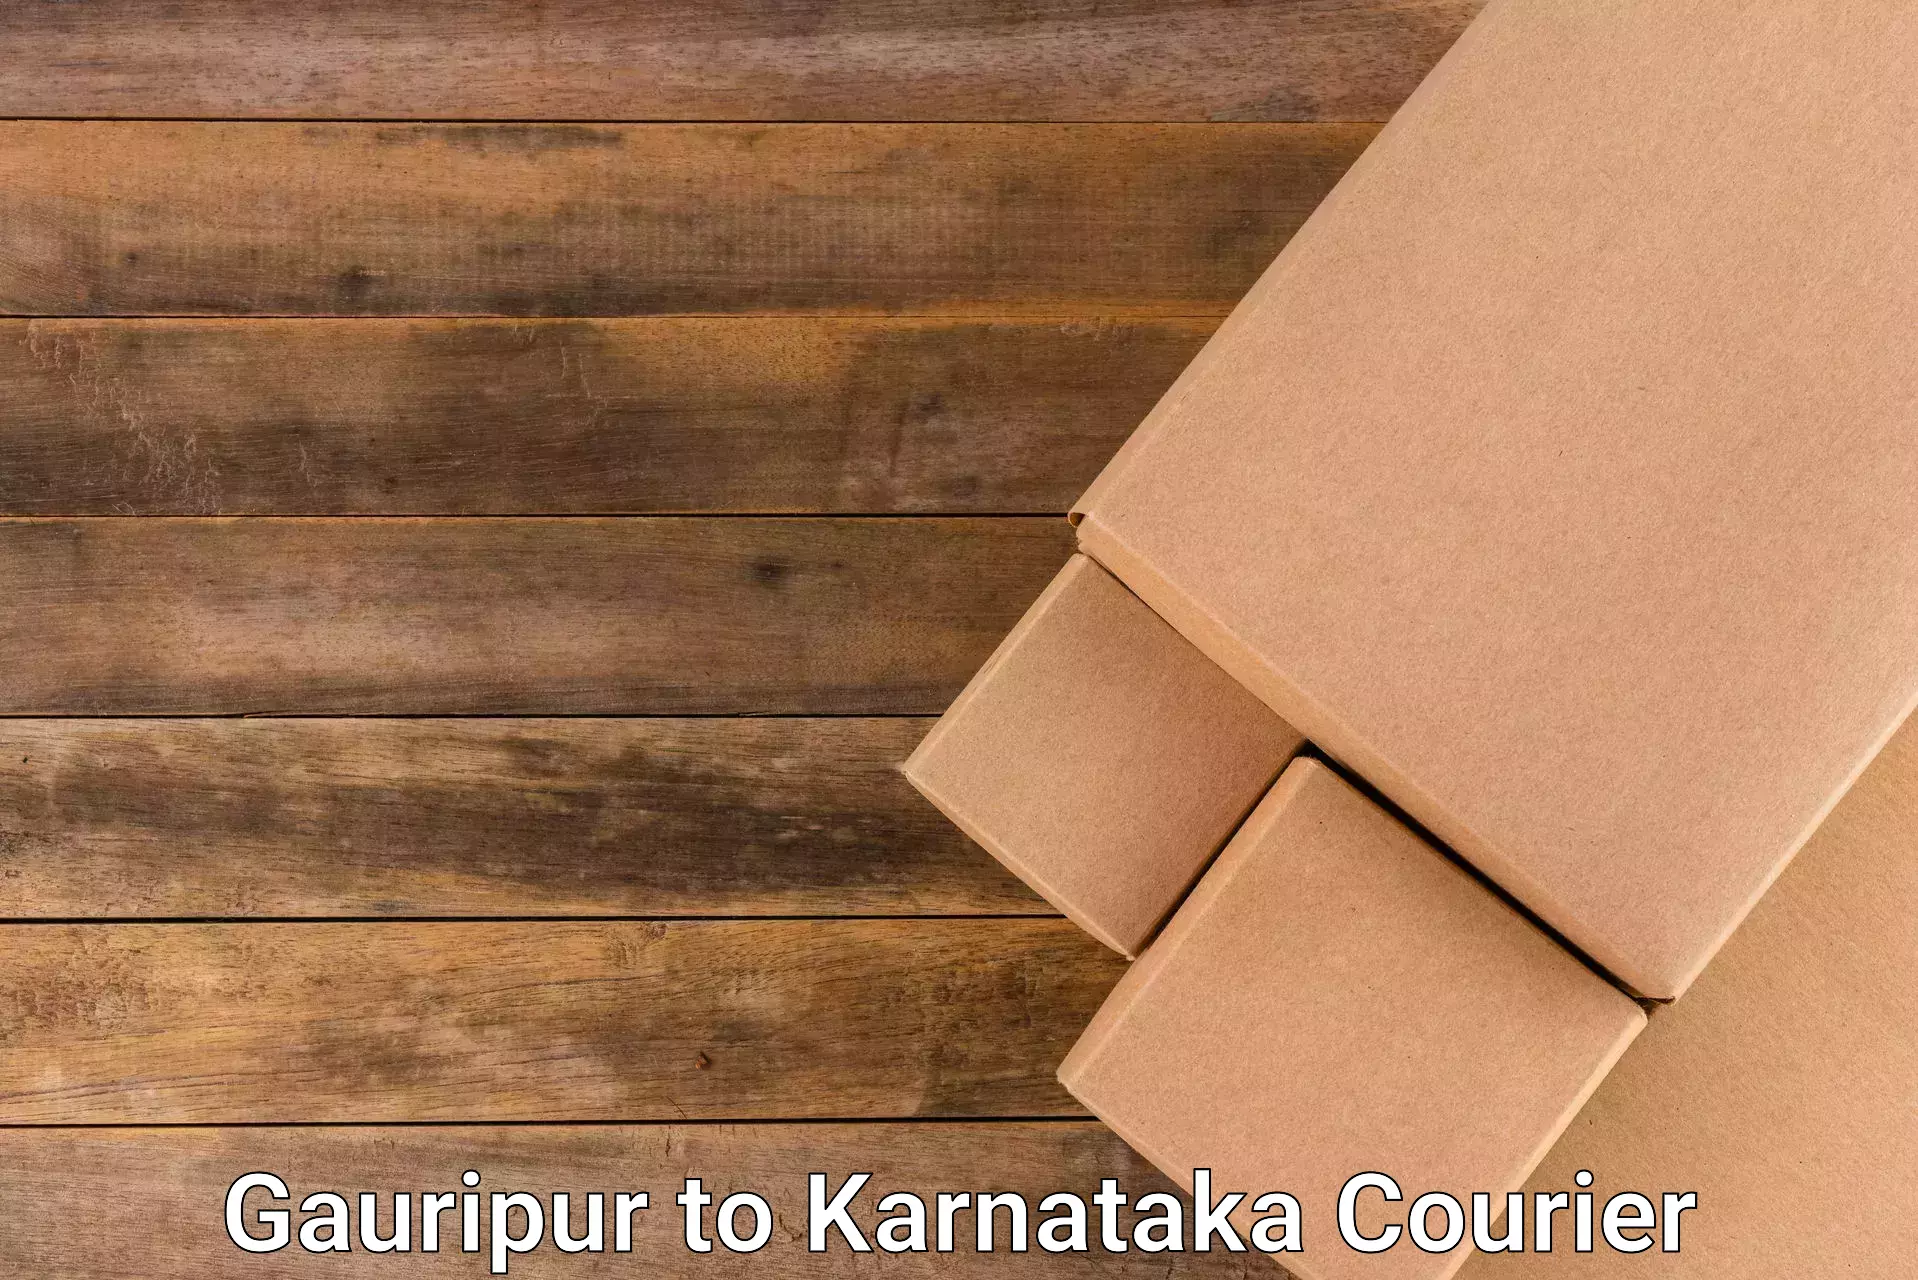 Courier service comparison Gauripur to Tiptur